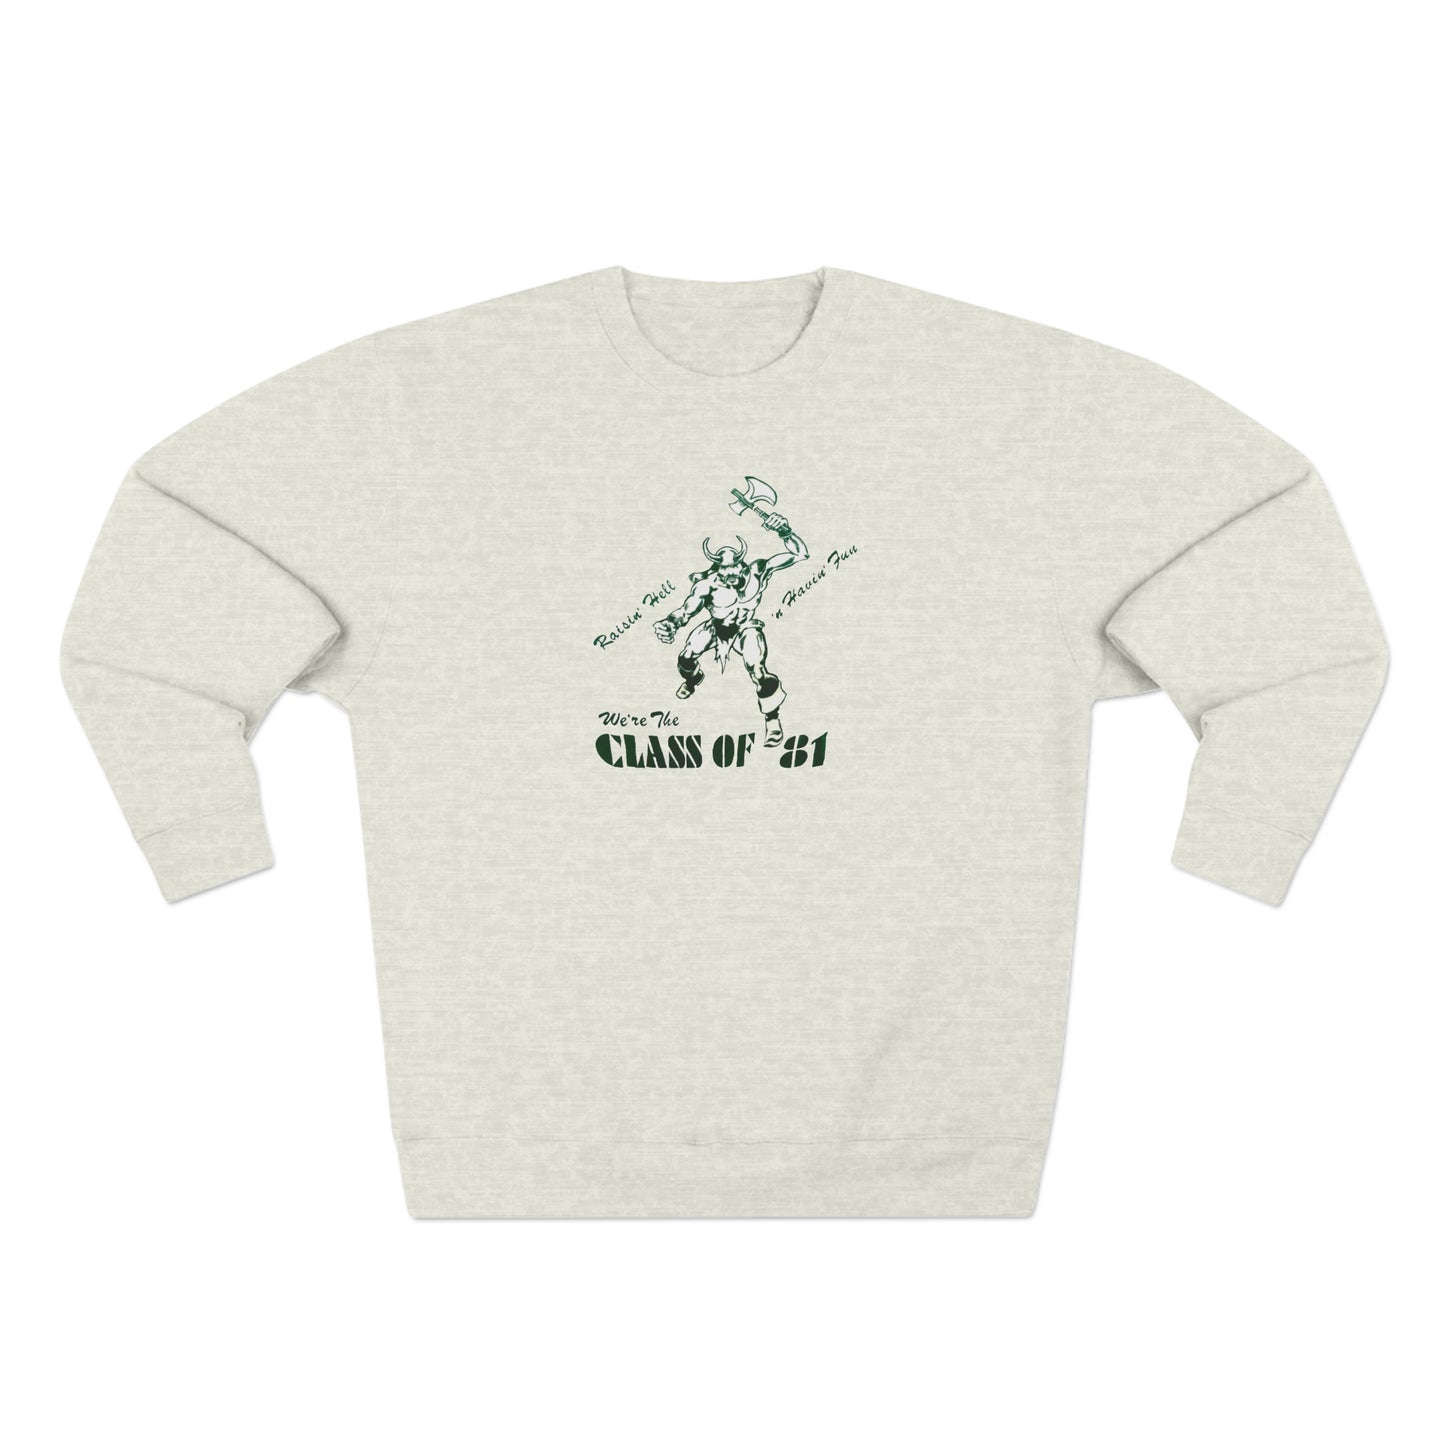 Paly 81 Premium Sweatshirt - Palo Alto High School - Exclusive 1981